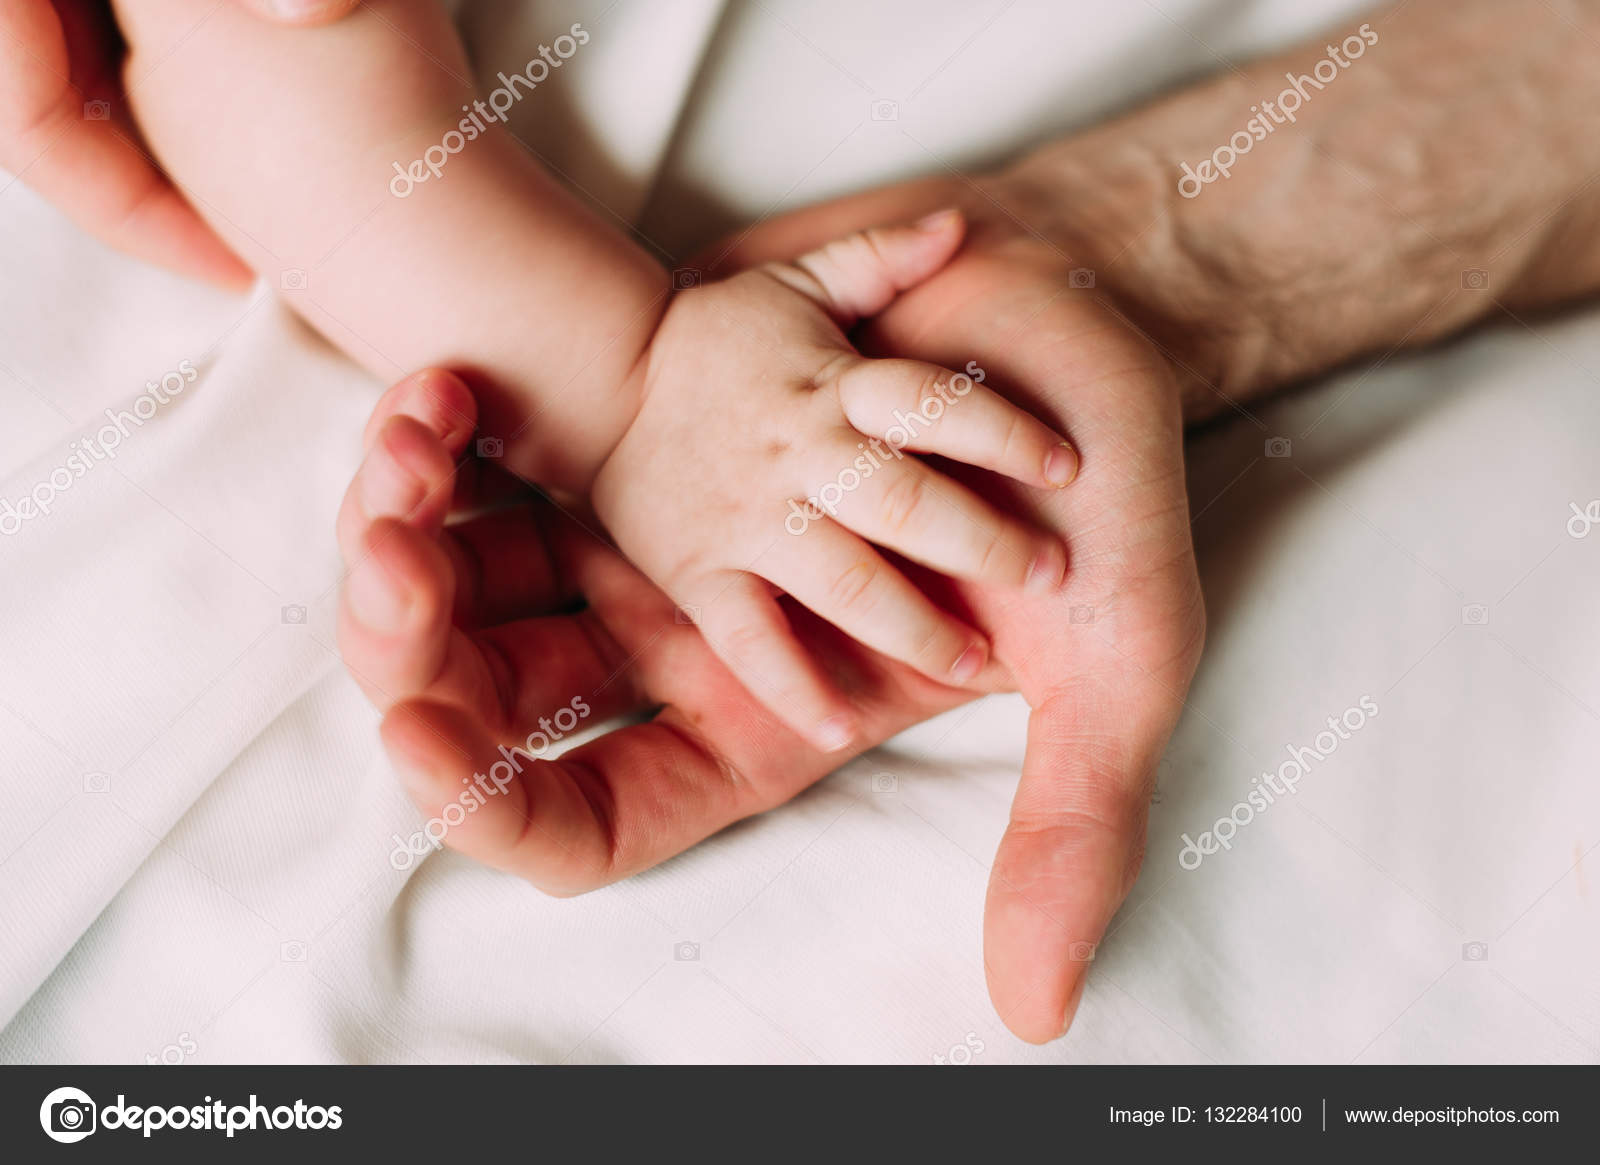 https://st3.depositphotos.com/6986940/13228/i/1600/depositphotos_132284100-stock-photo-holding-hands-of-loving-father.jpg